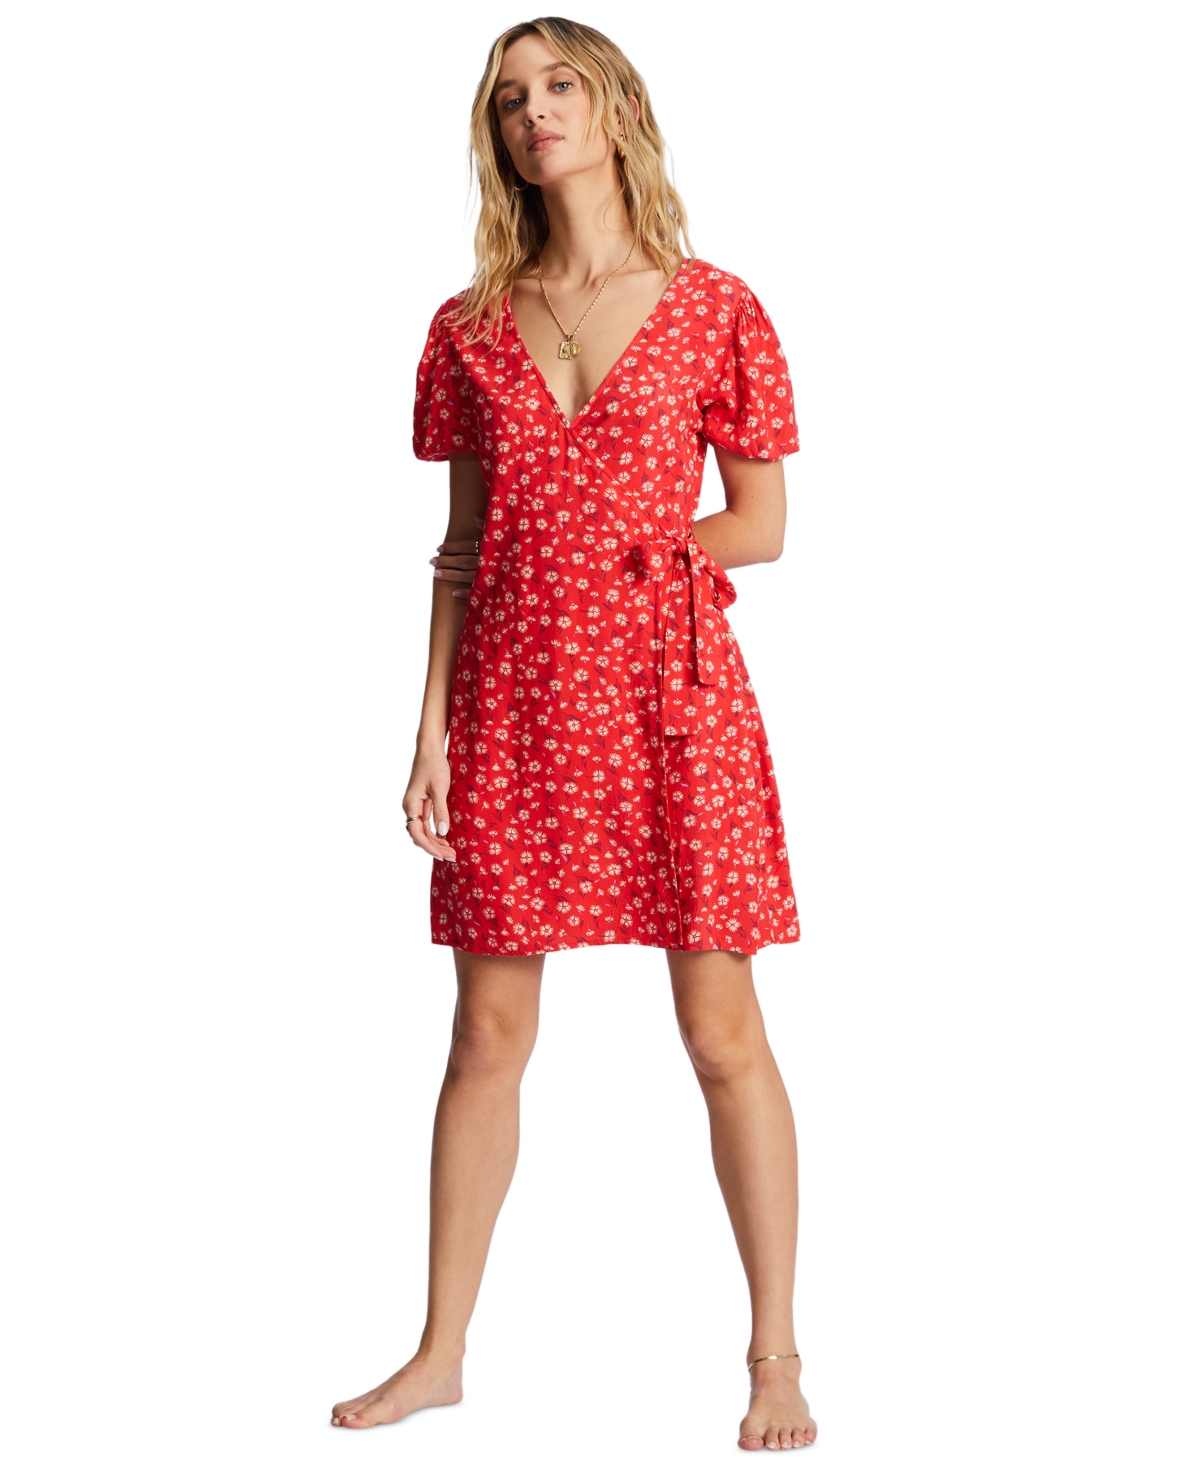 Kaufen Sie es jetzt, Originalprodukt Billabong Juniors\' Hot Tropics Dress Smart Closet Wrap Floral Mini 